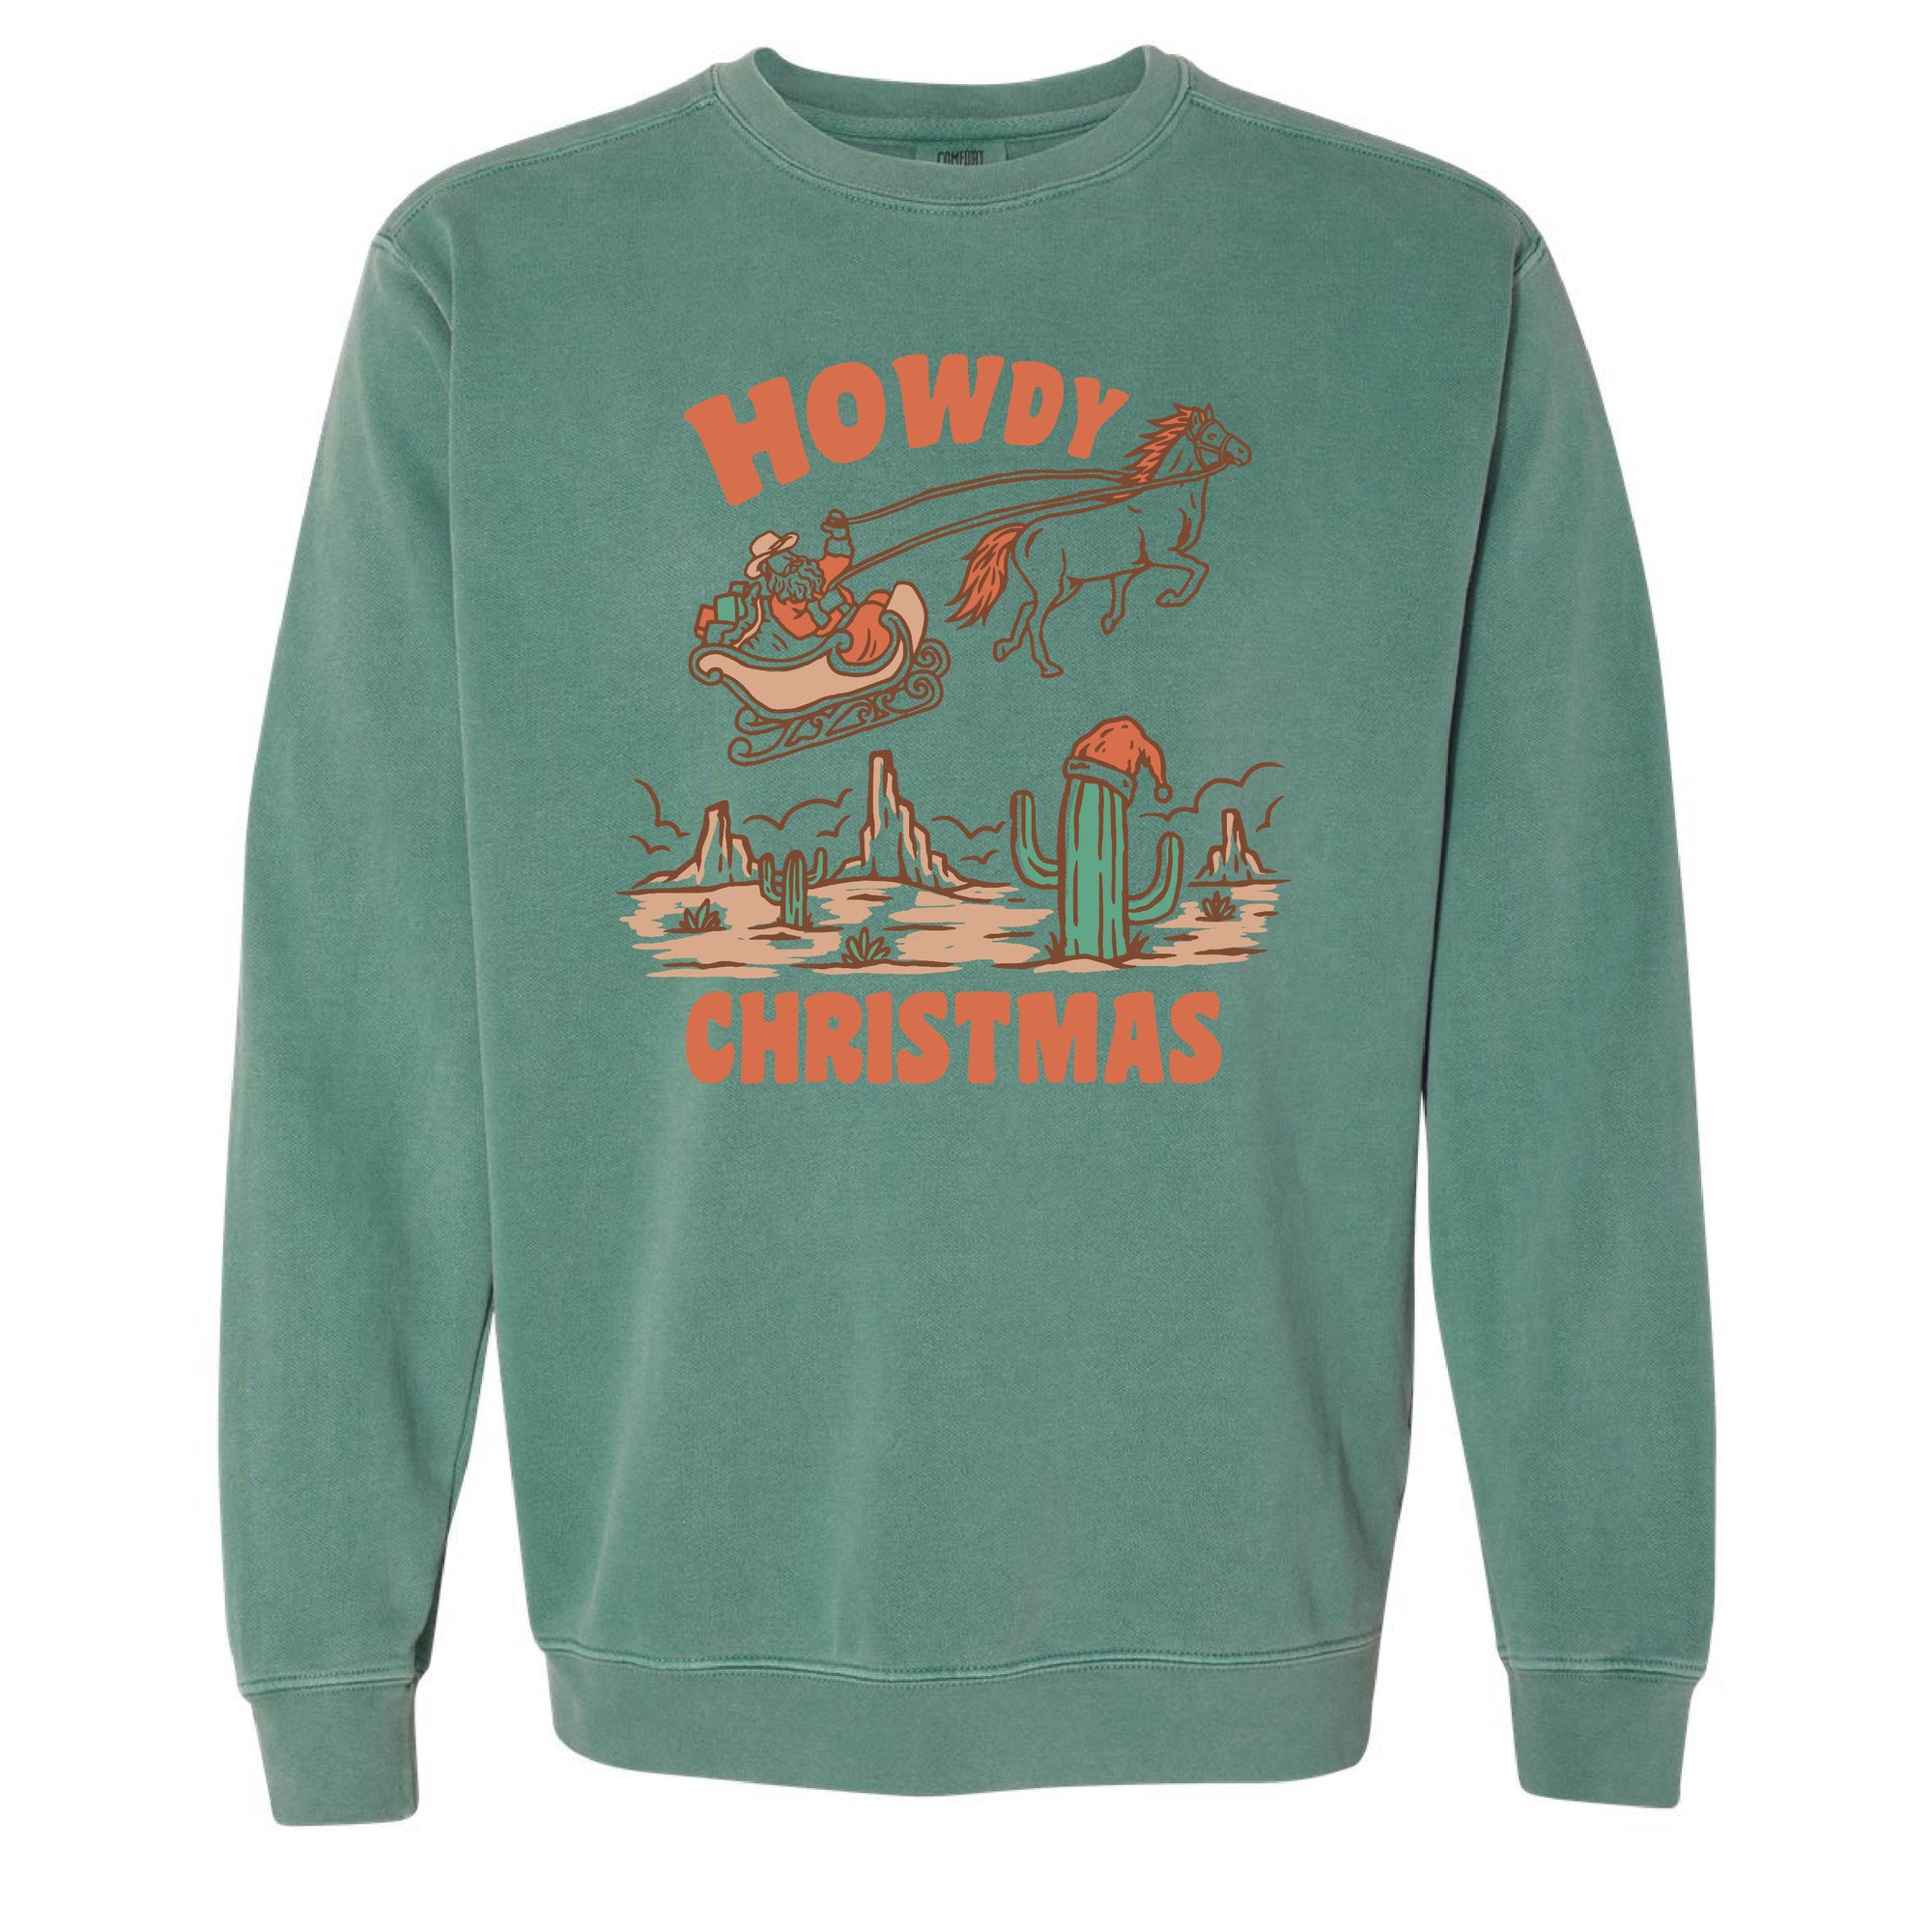 Howdy Christmas Sweater